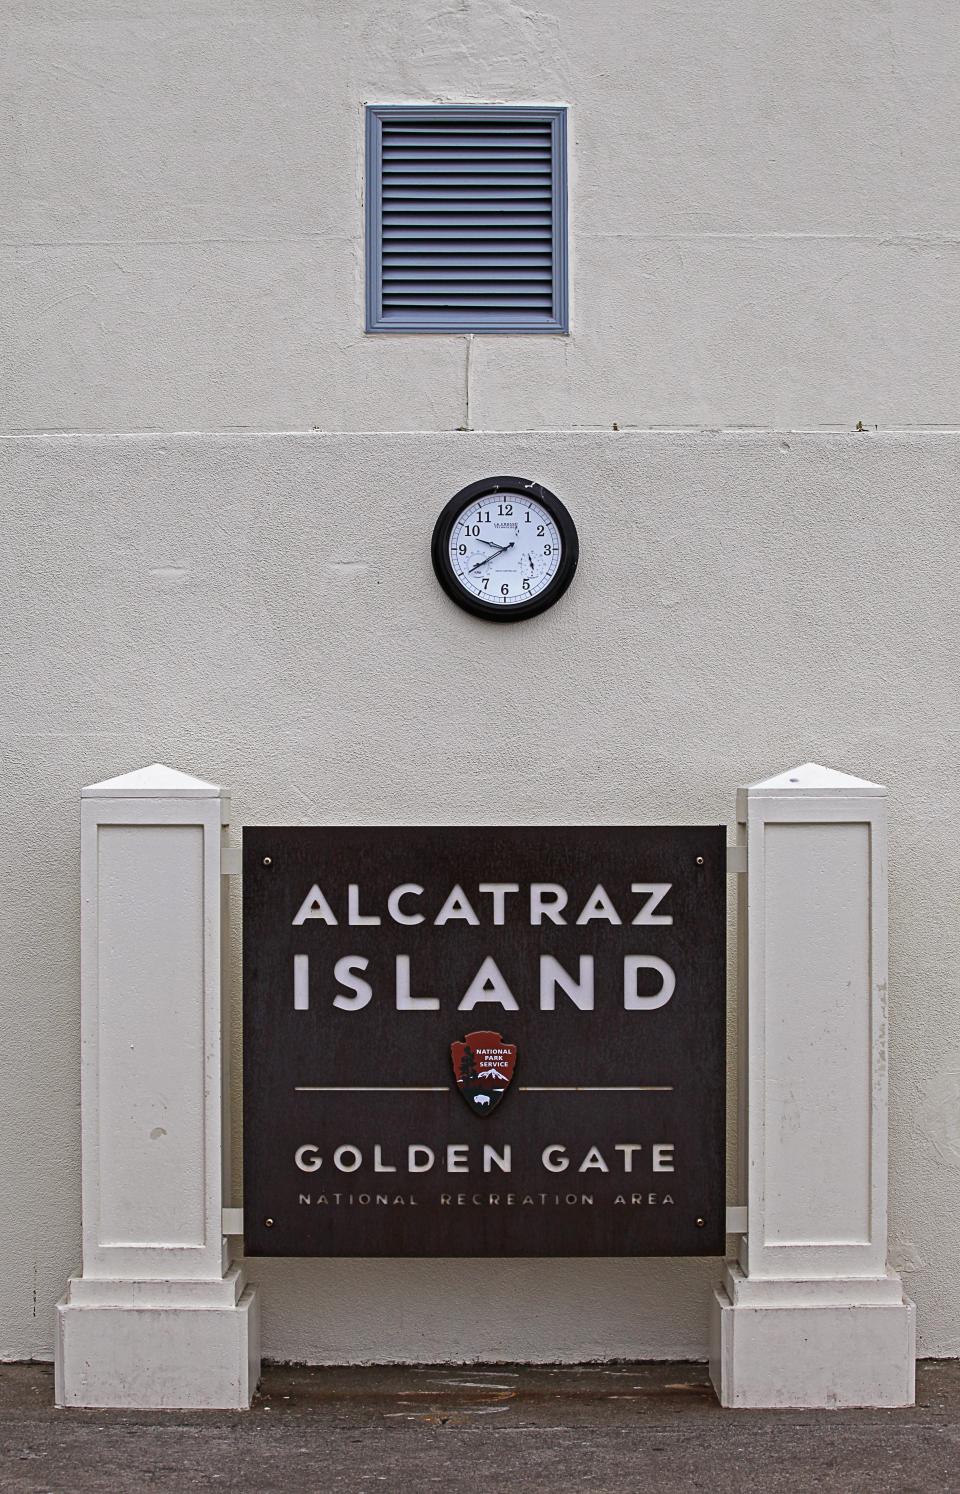 The Alcatraz Island Golden Gate National Recreation Area clock awaiting visitors on their arrival to Alcatraz.